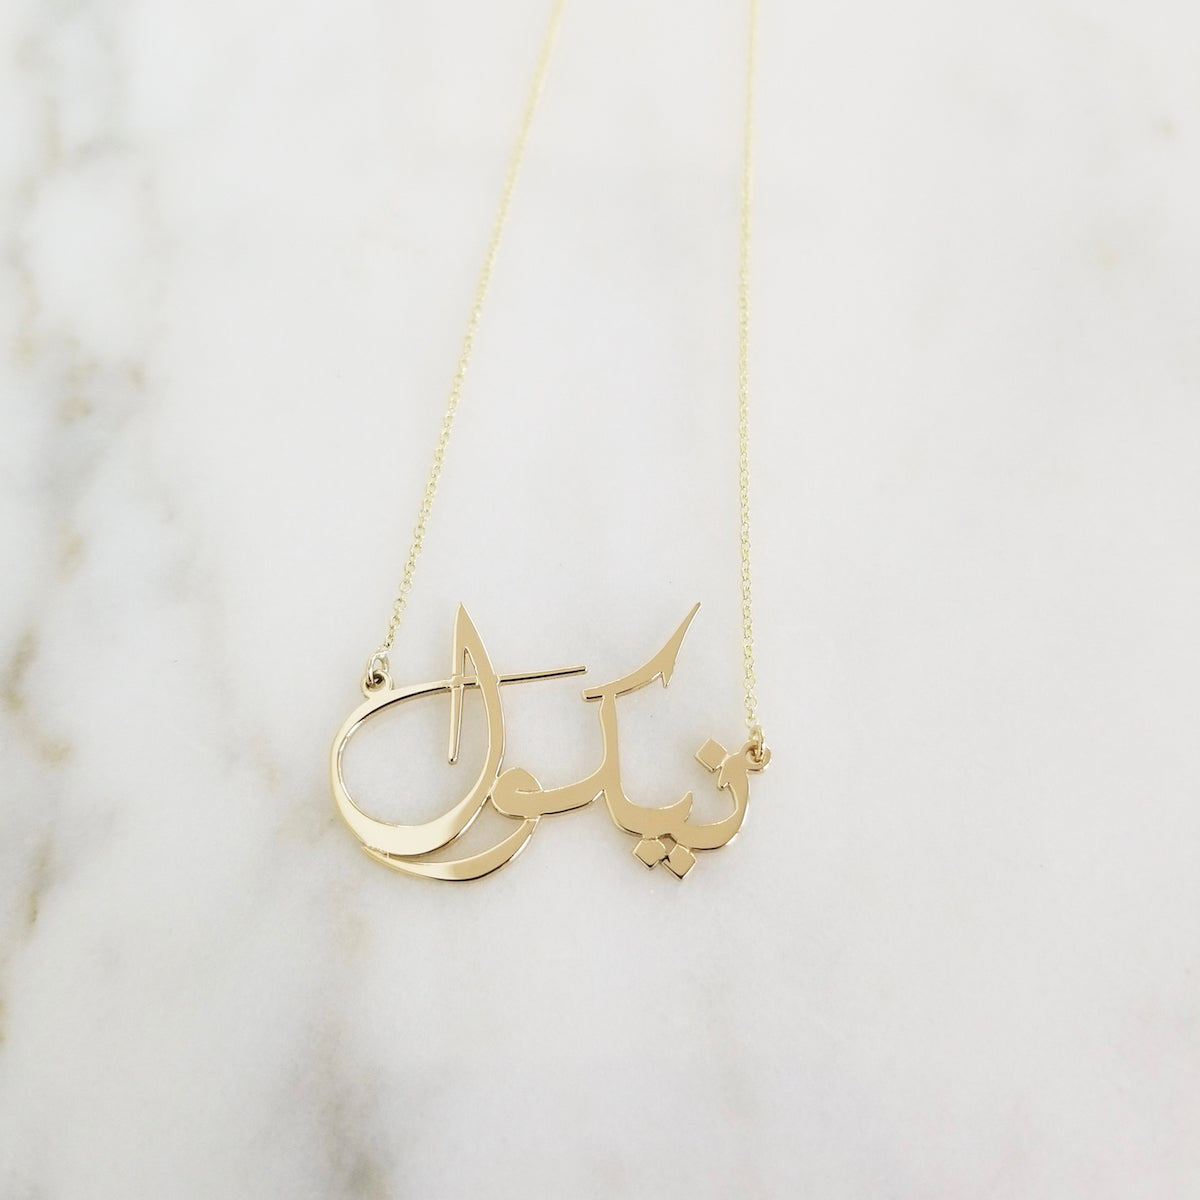 Kimiya Jewelers Script/Calligraphy Persian/Arabic Nameplate Necklace